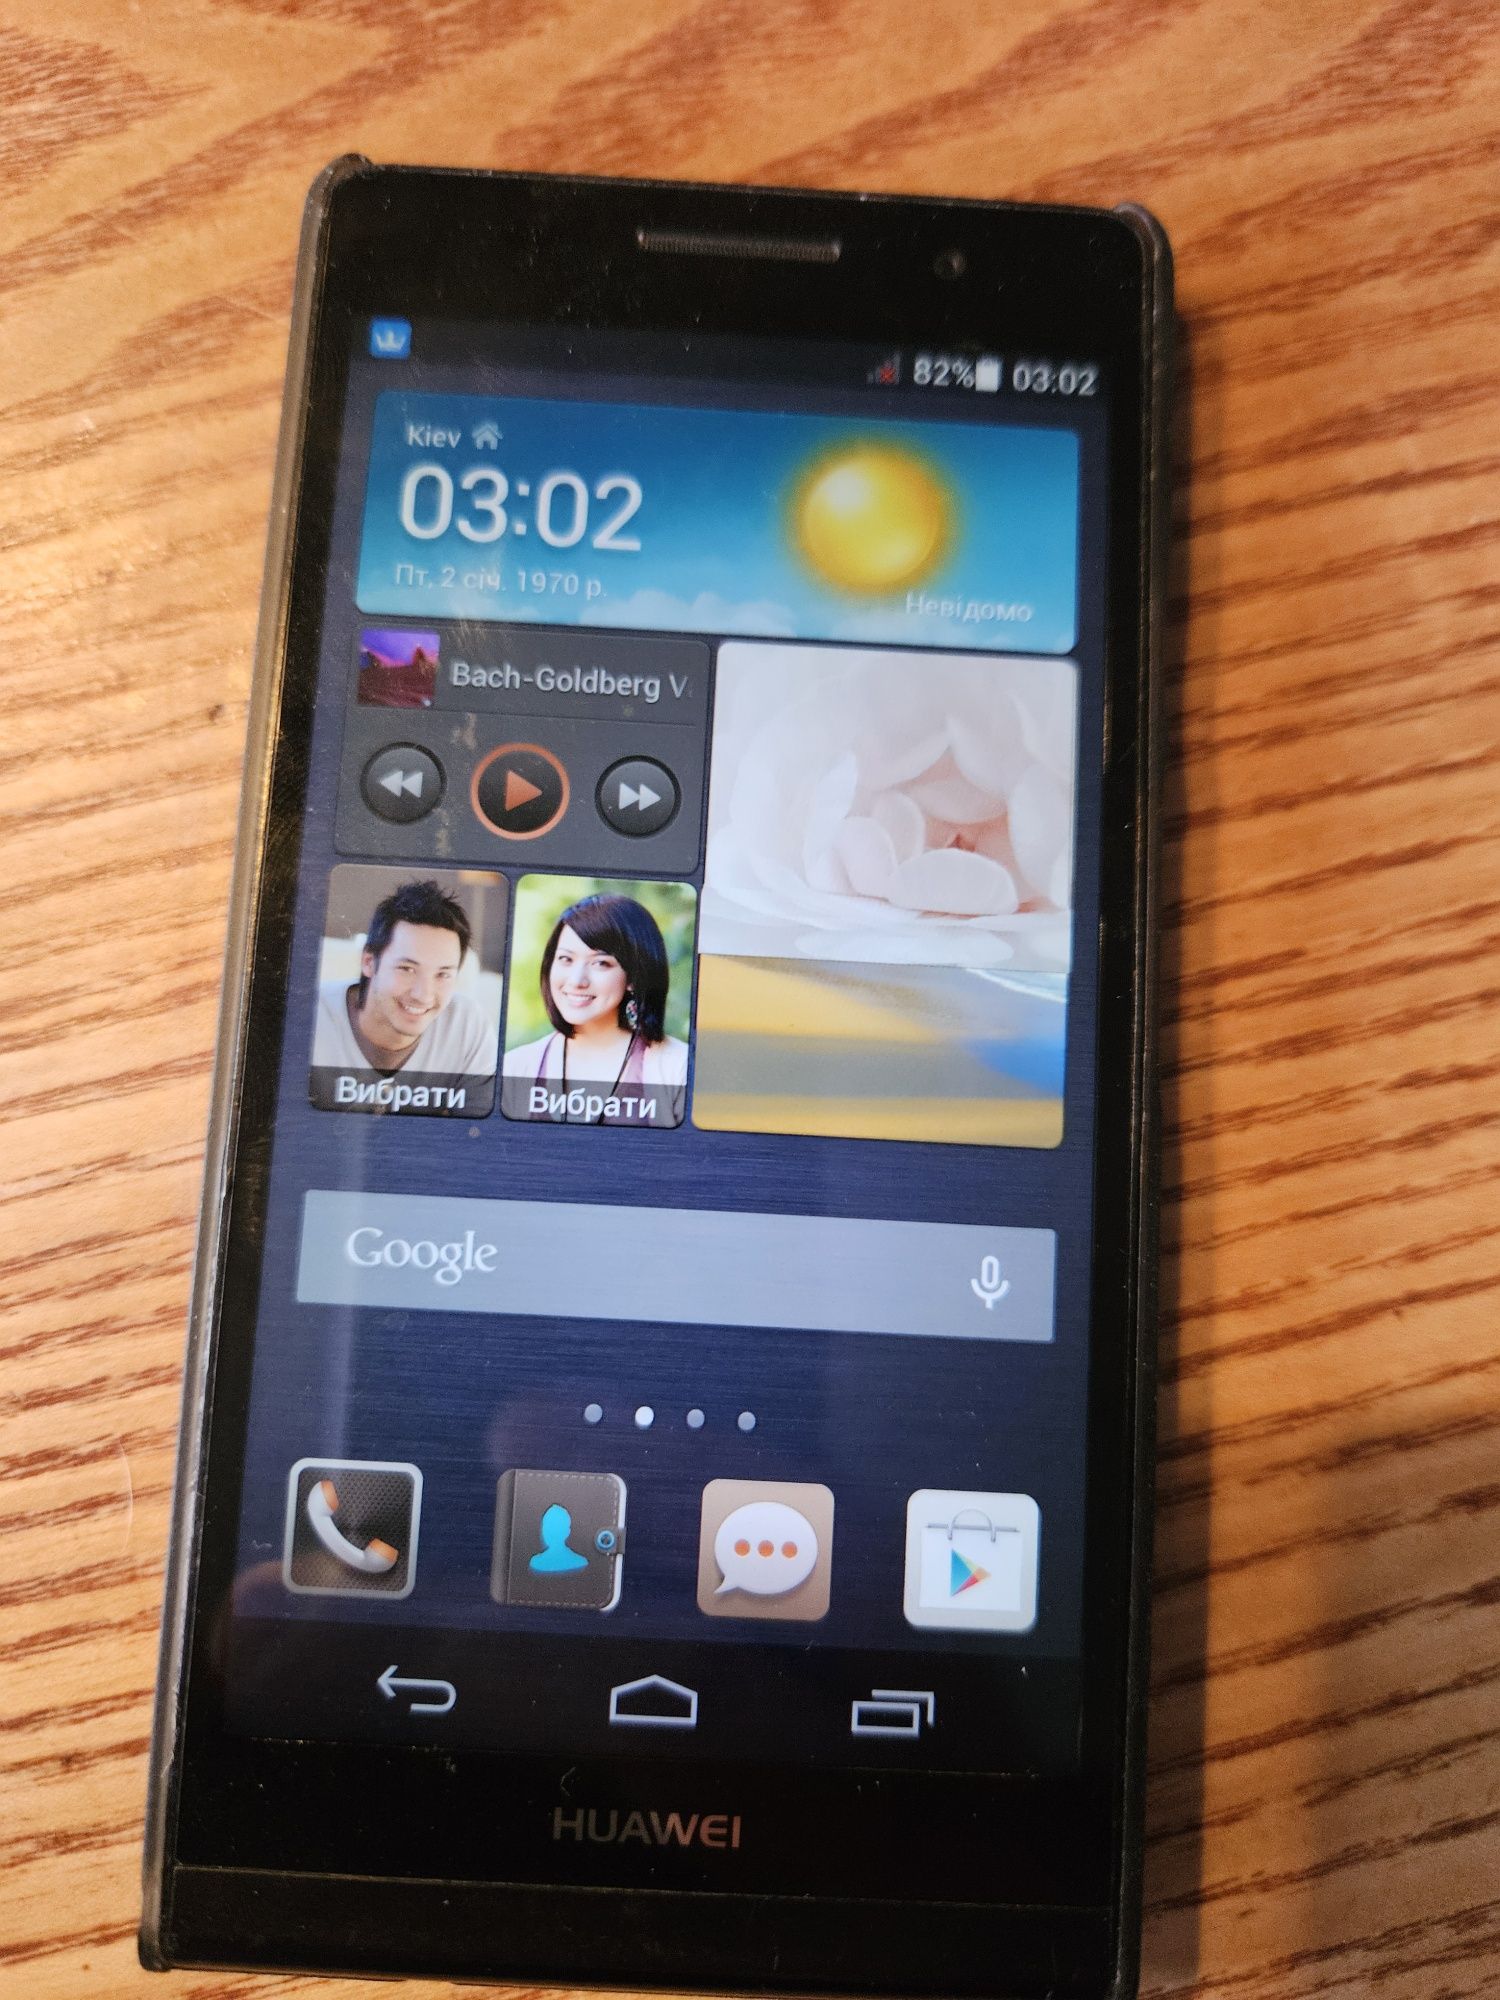 Huawei P6-C00 телефон CDMA/GSM 3G дводиапазонний.